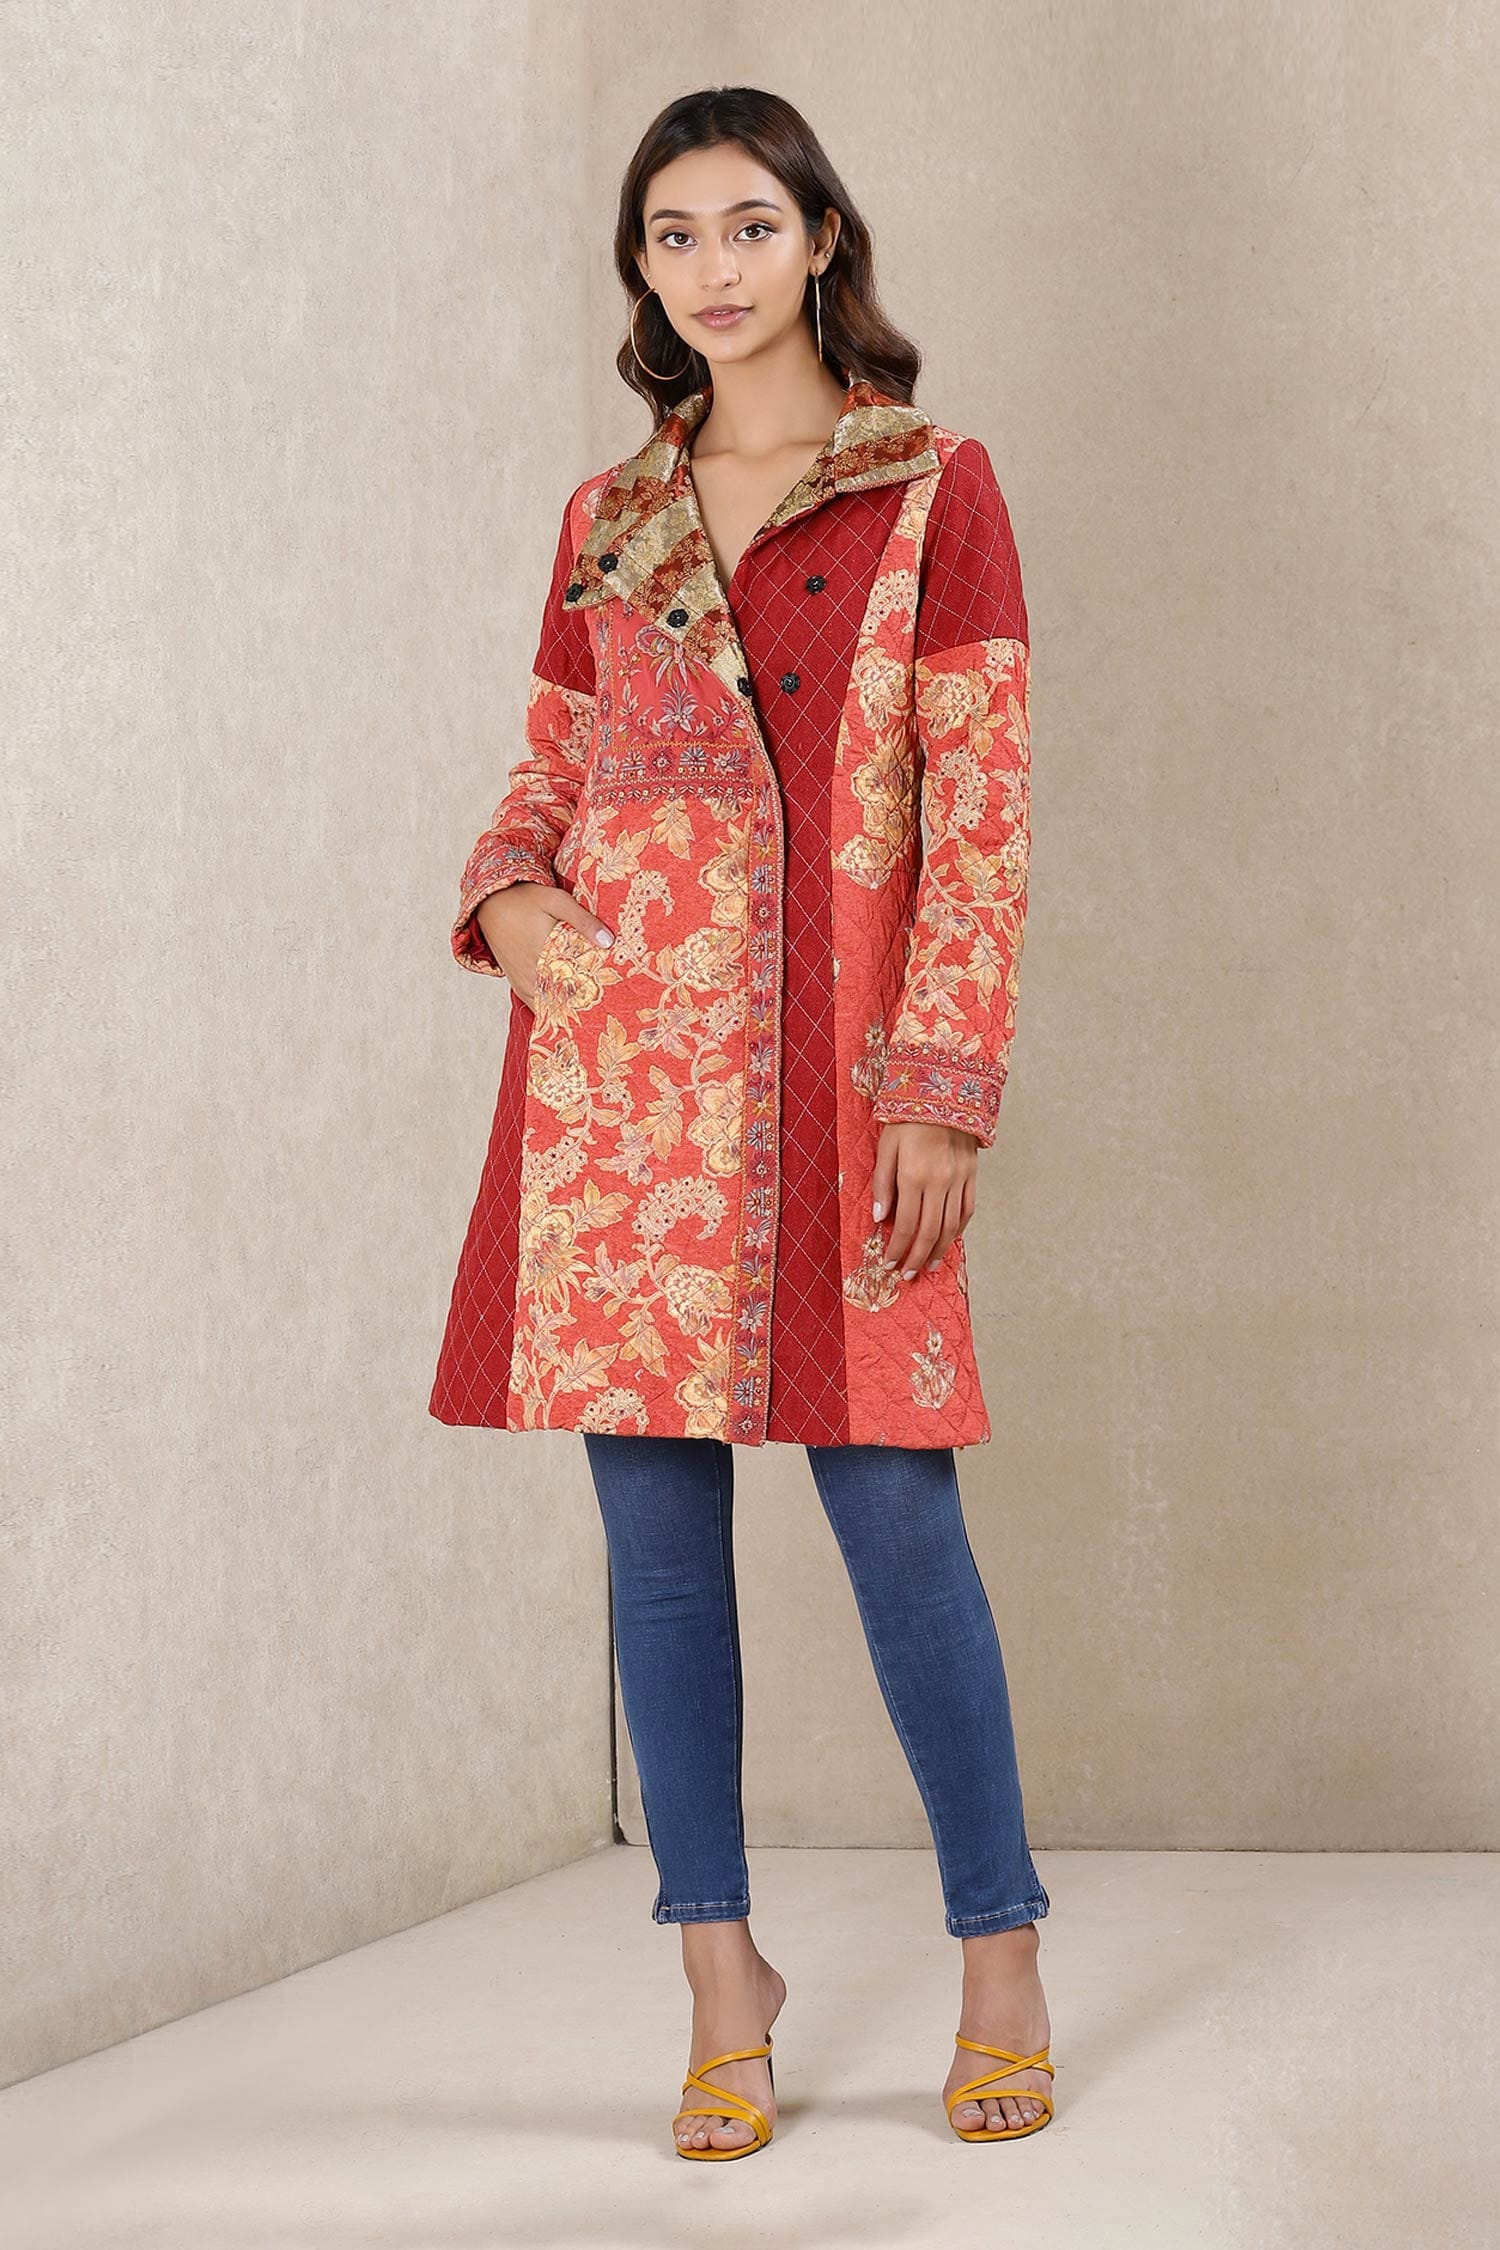 Buy Label Ritu Kumar Jackets & Coats - Women | FASHIOLA INDIA